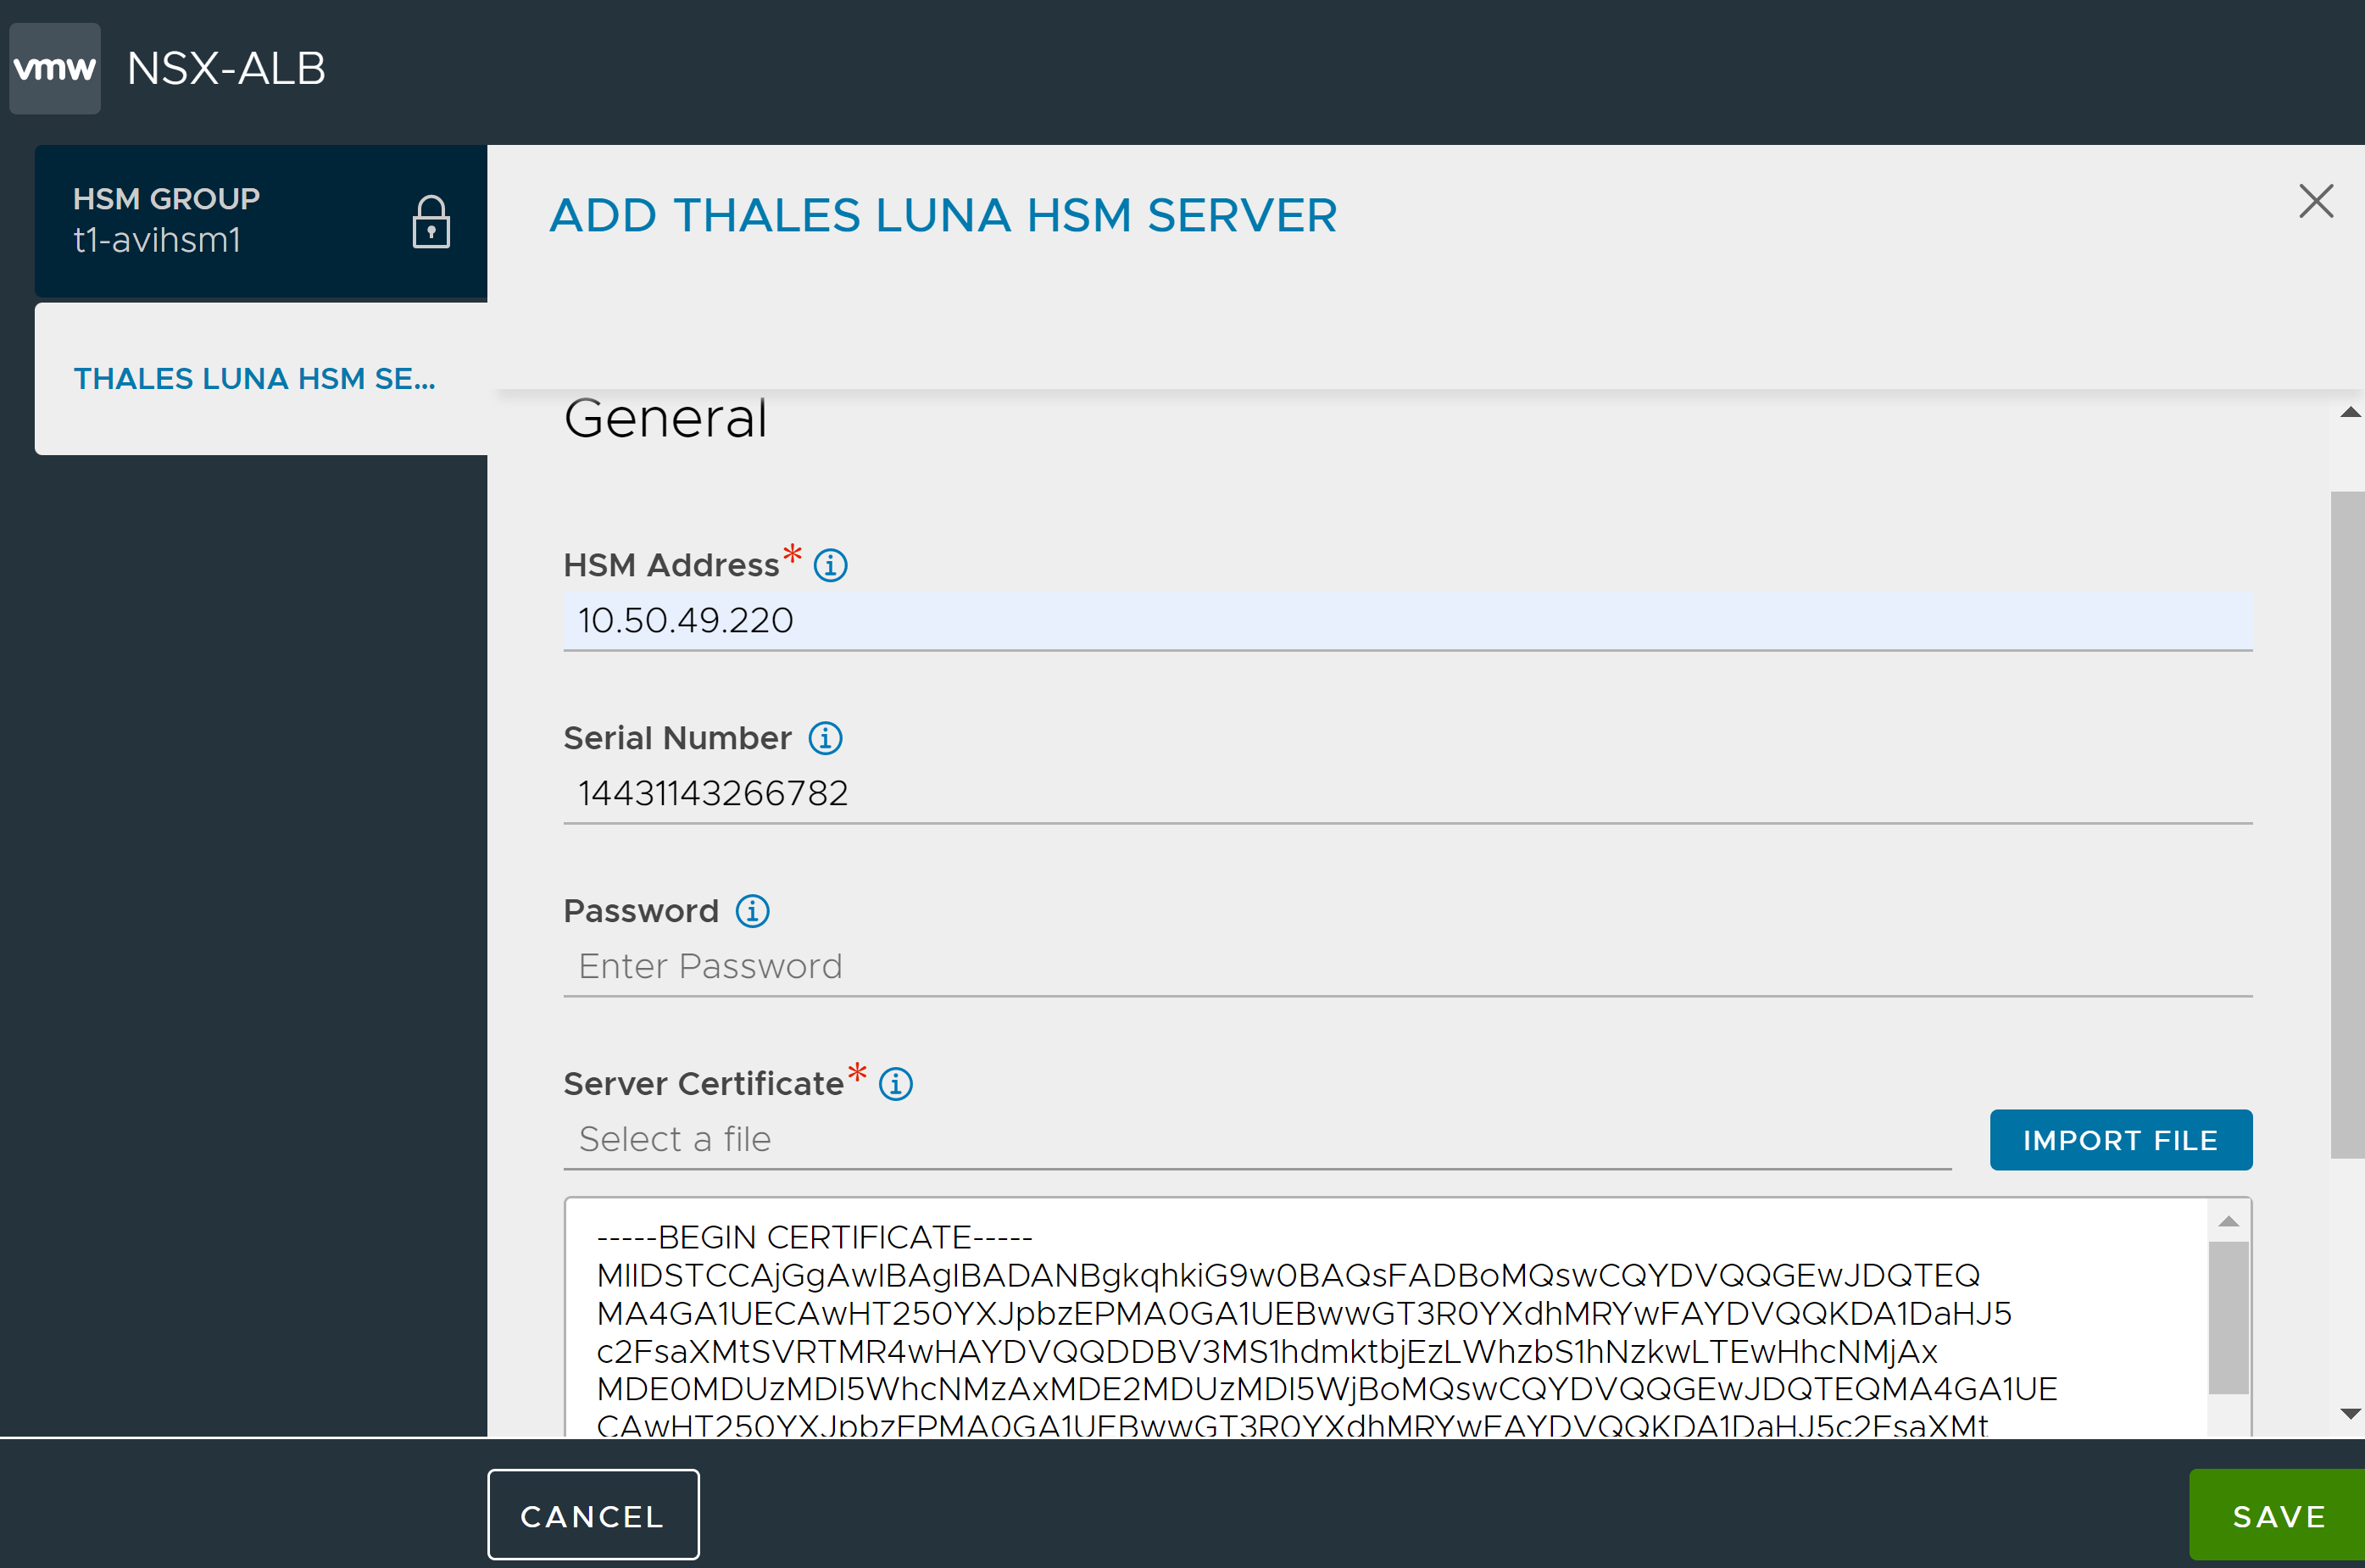 Thales Luna HSM Server